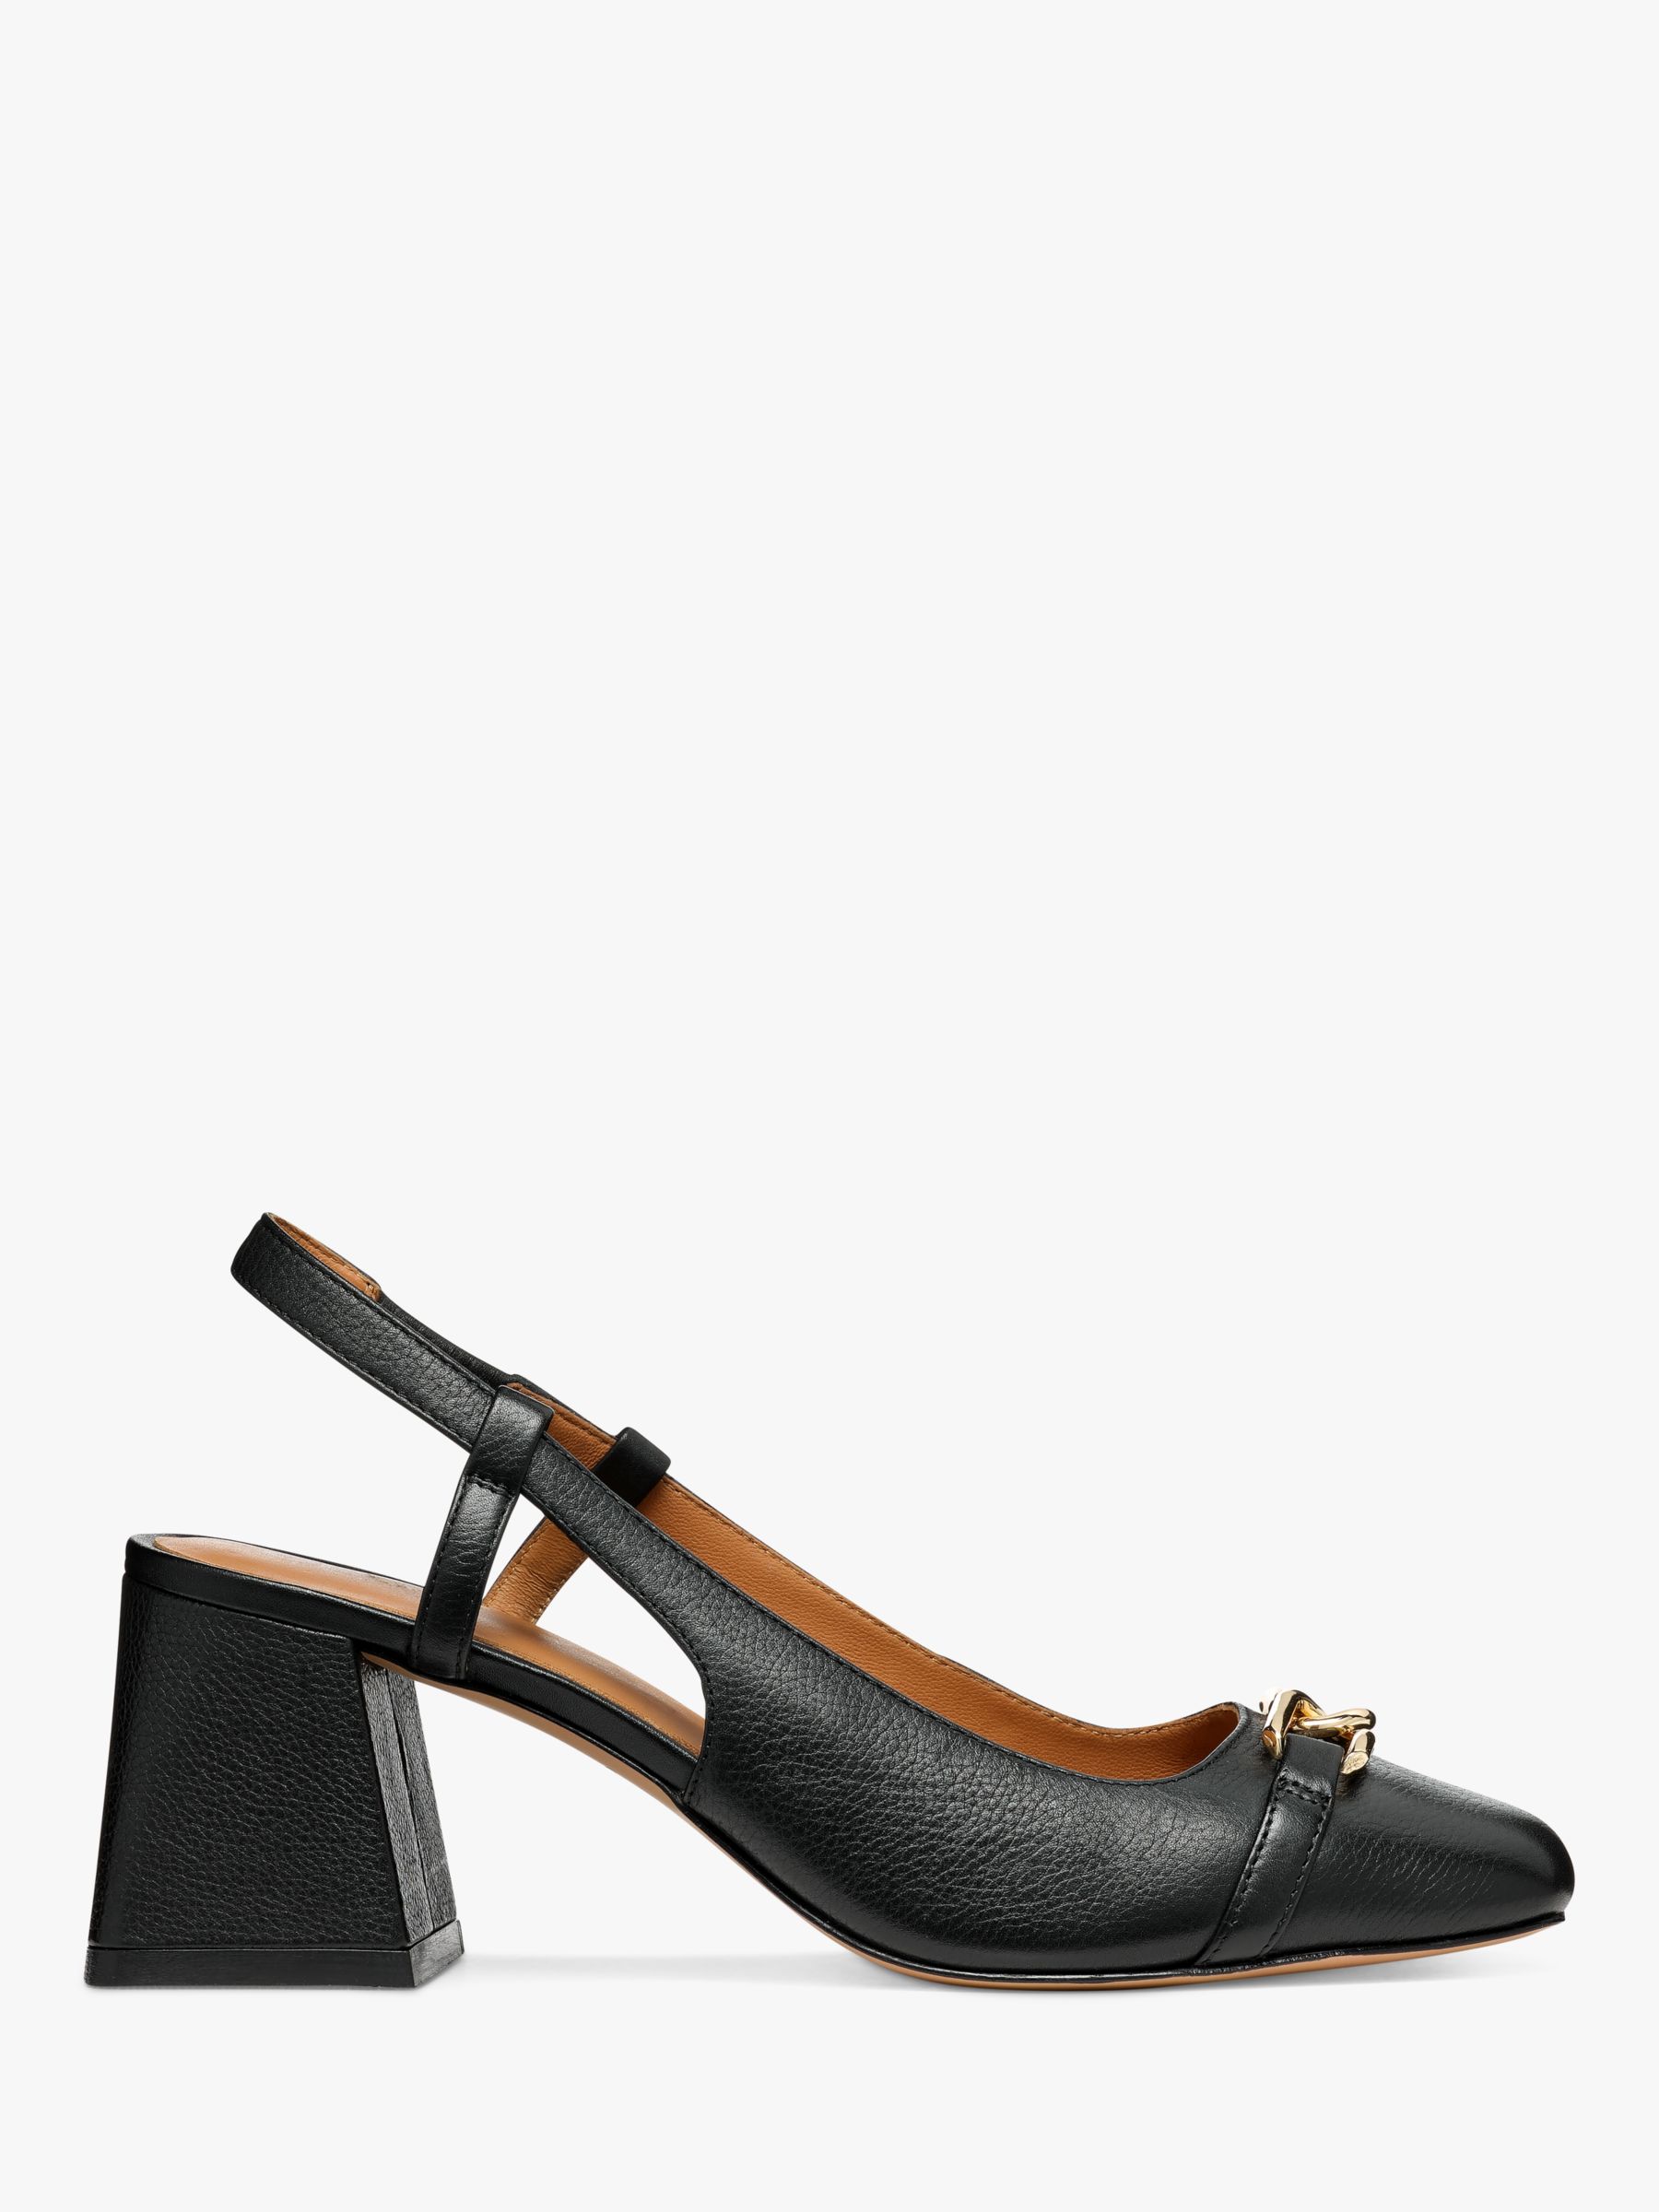 Geox Coronilla Square Toe Leather Slingback Court Shoes, Black, EU36